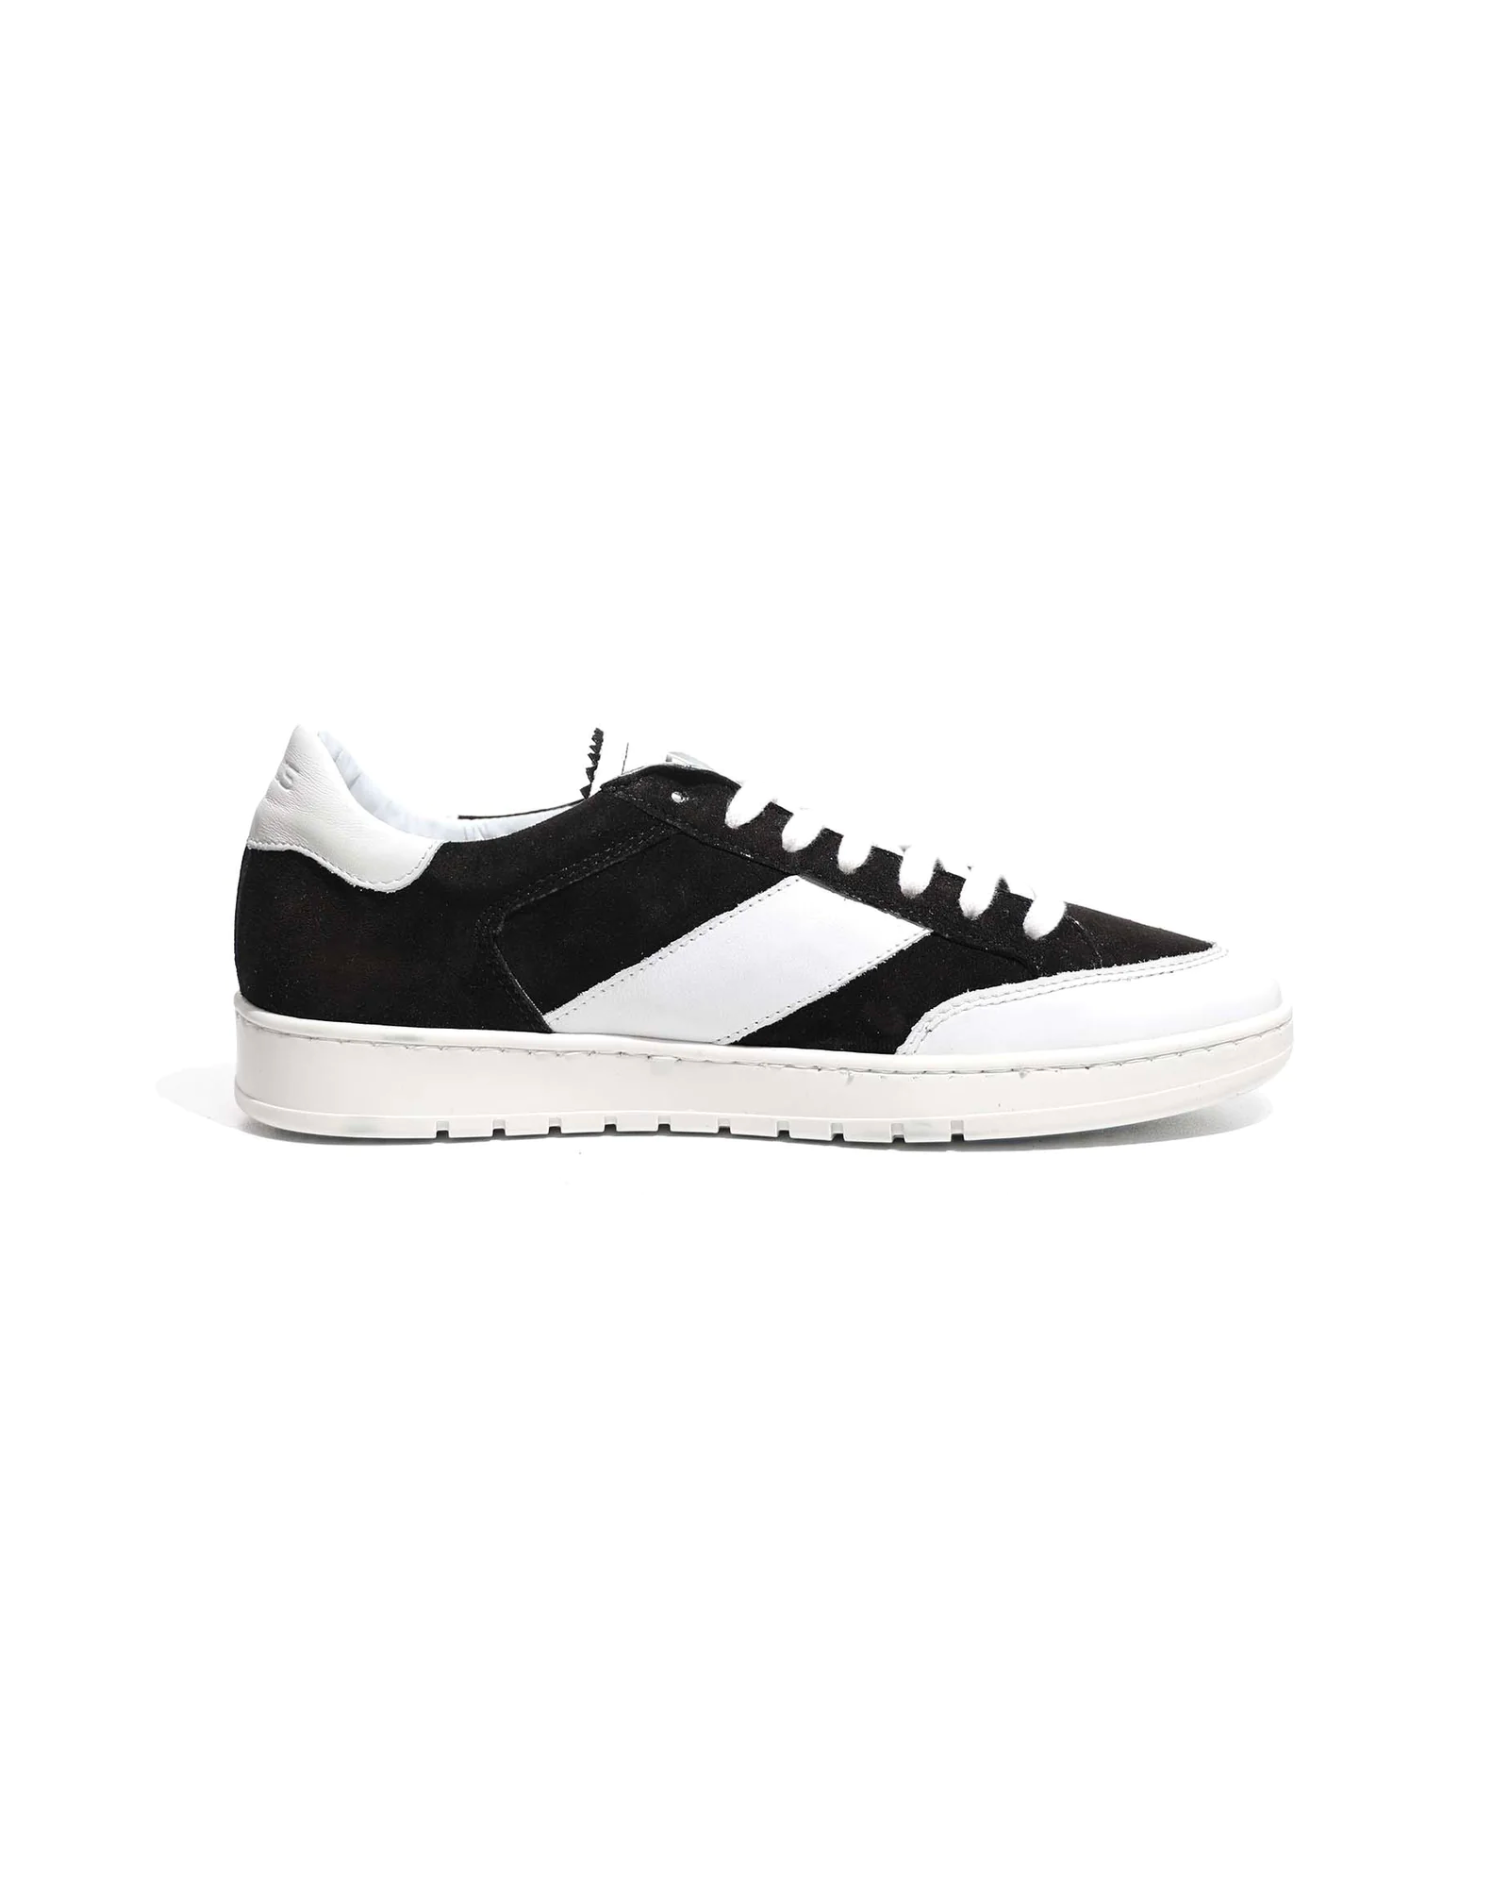 MJUS - Equipman Sneaker - Black/White